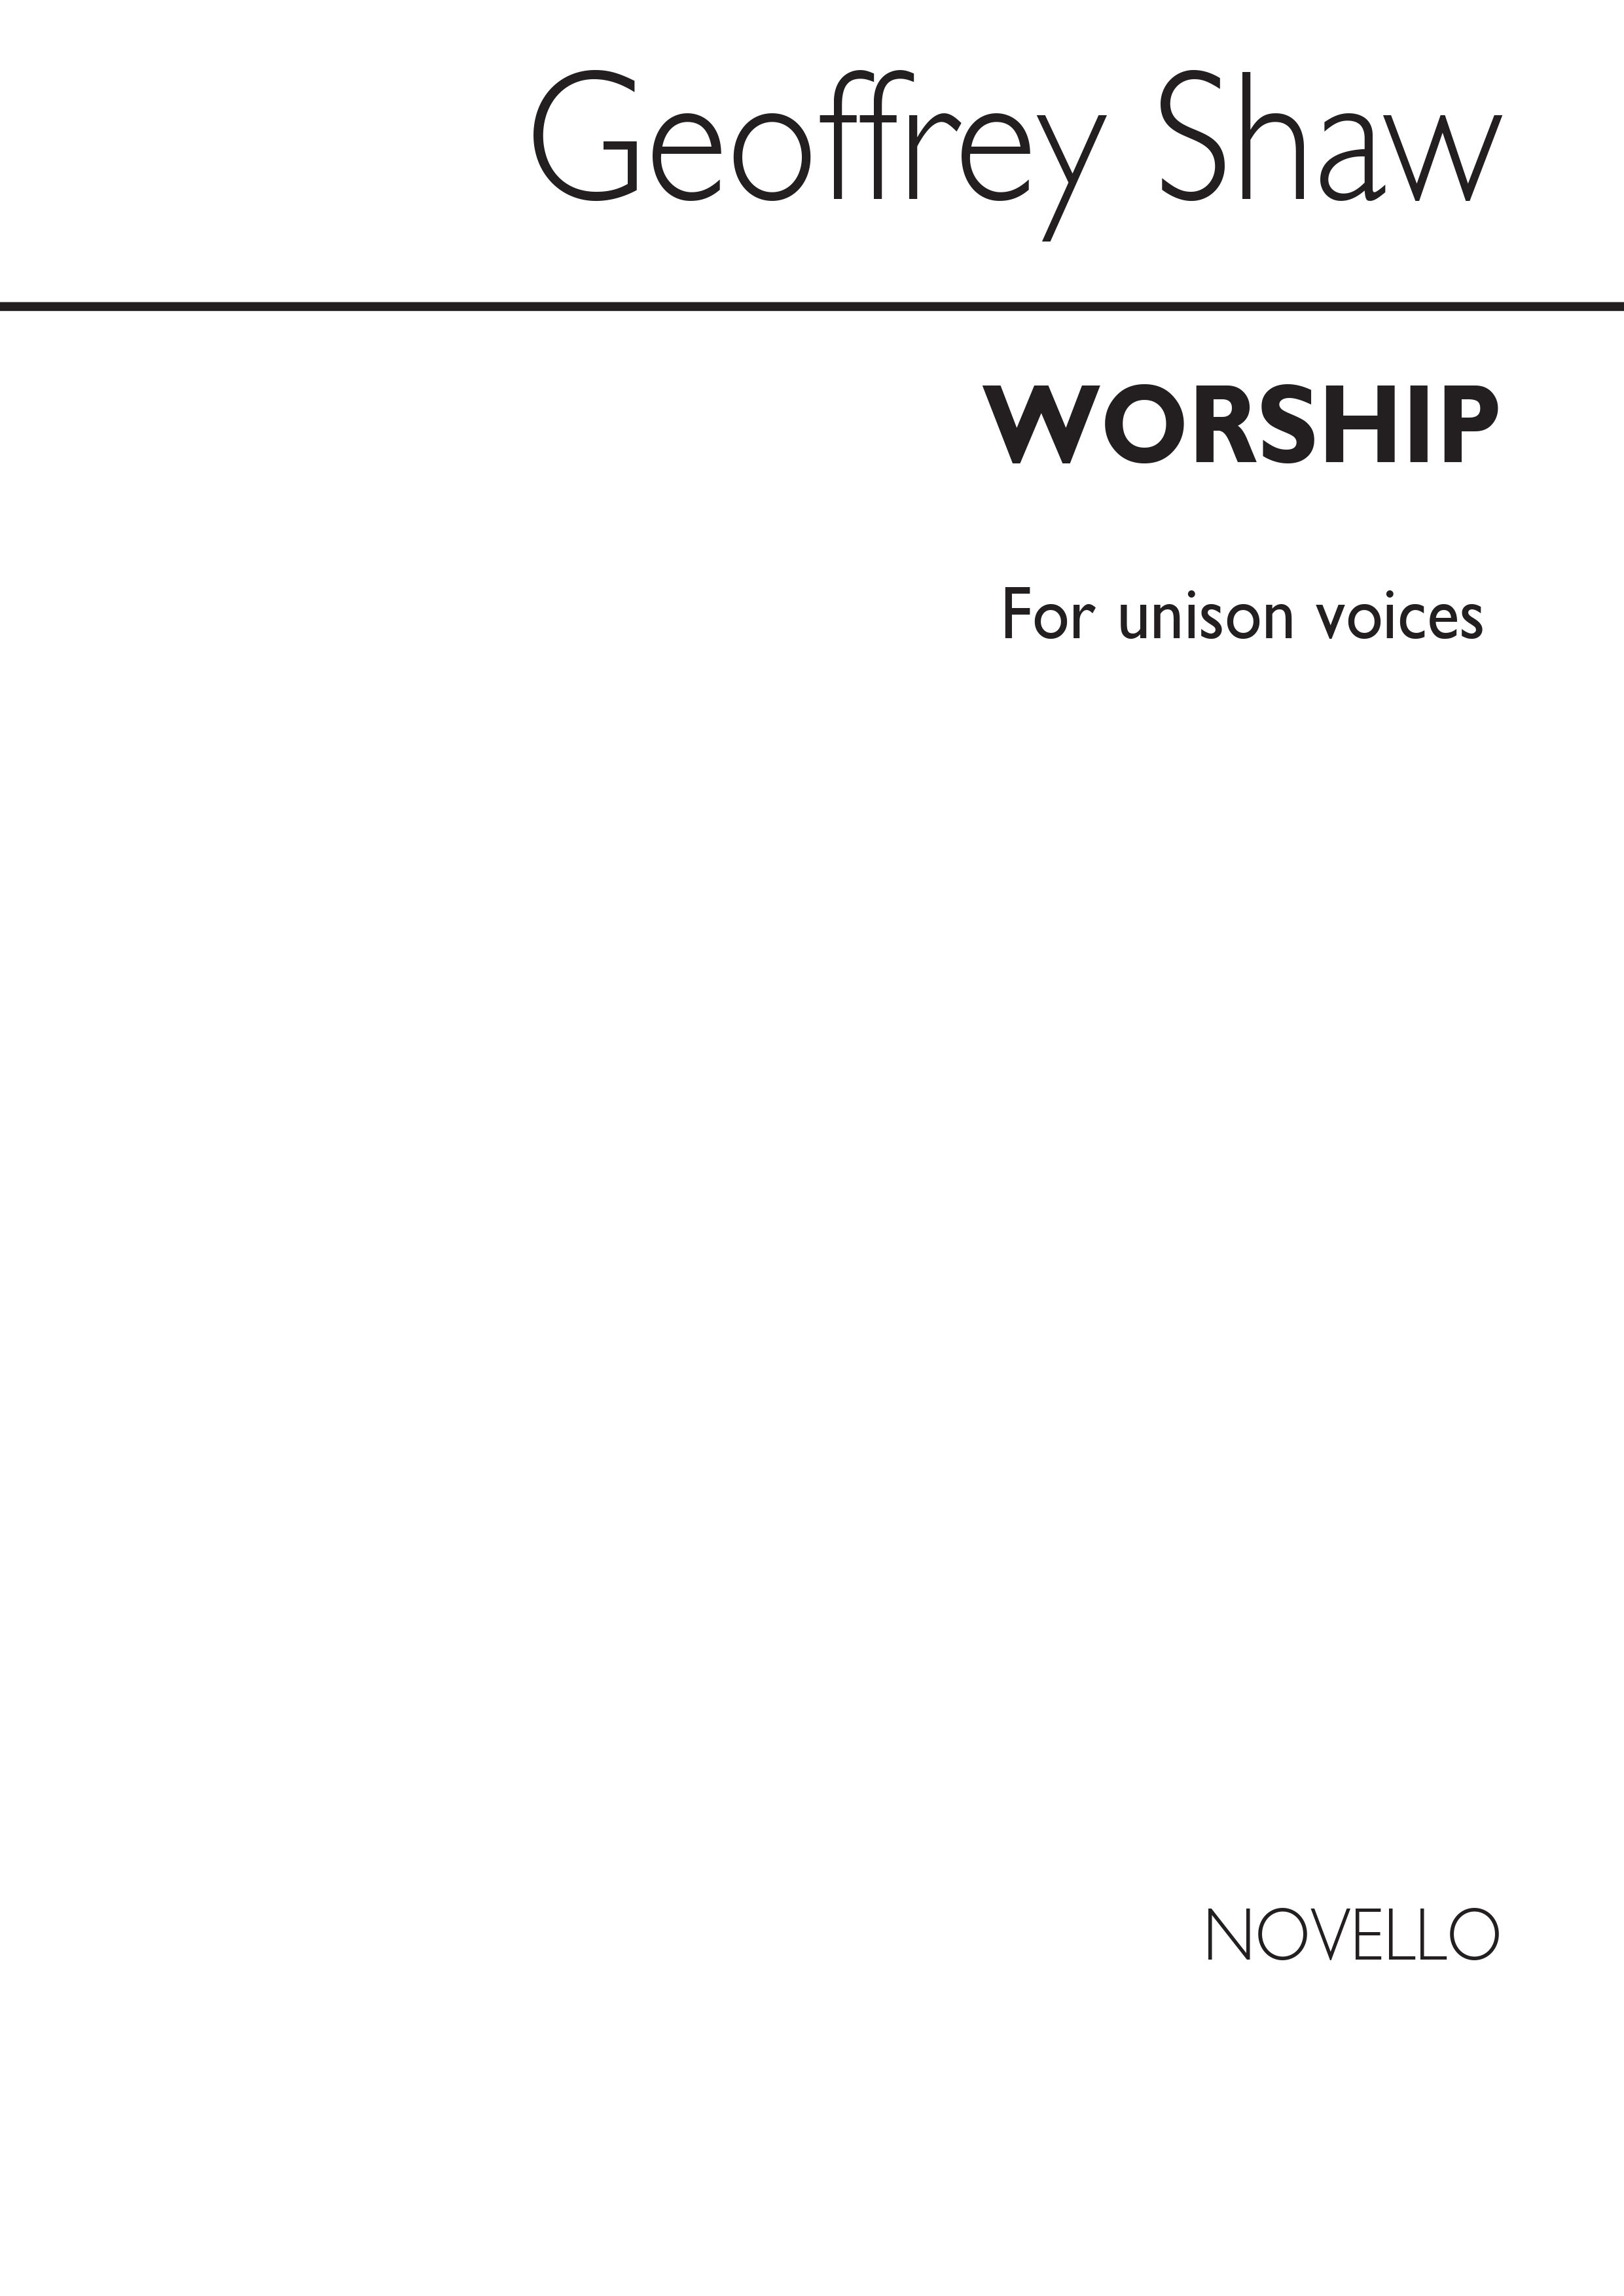 Geoffrey Shaw: Worship for Unison chorus